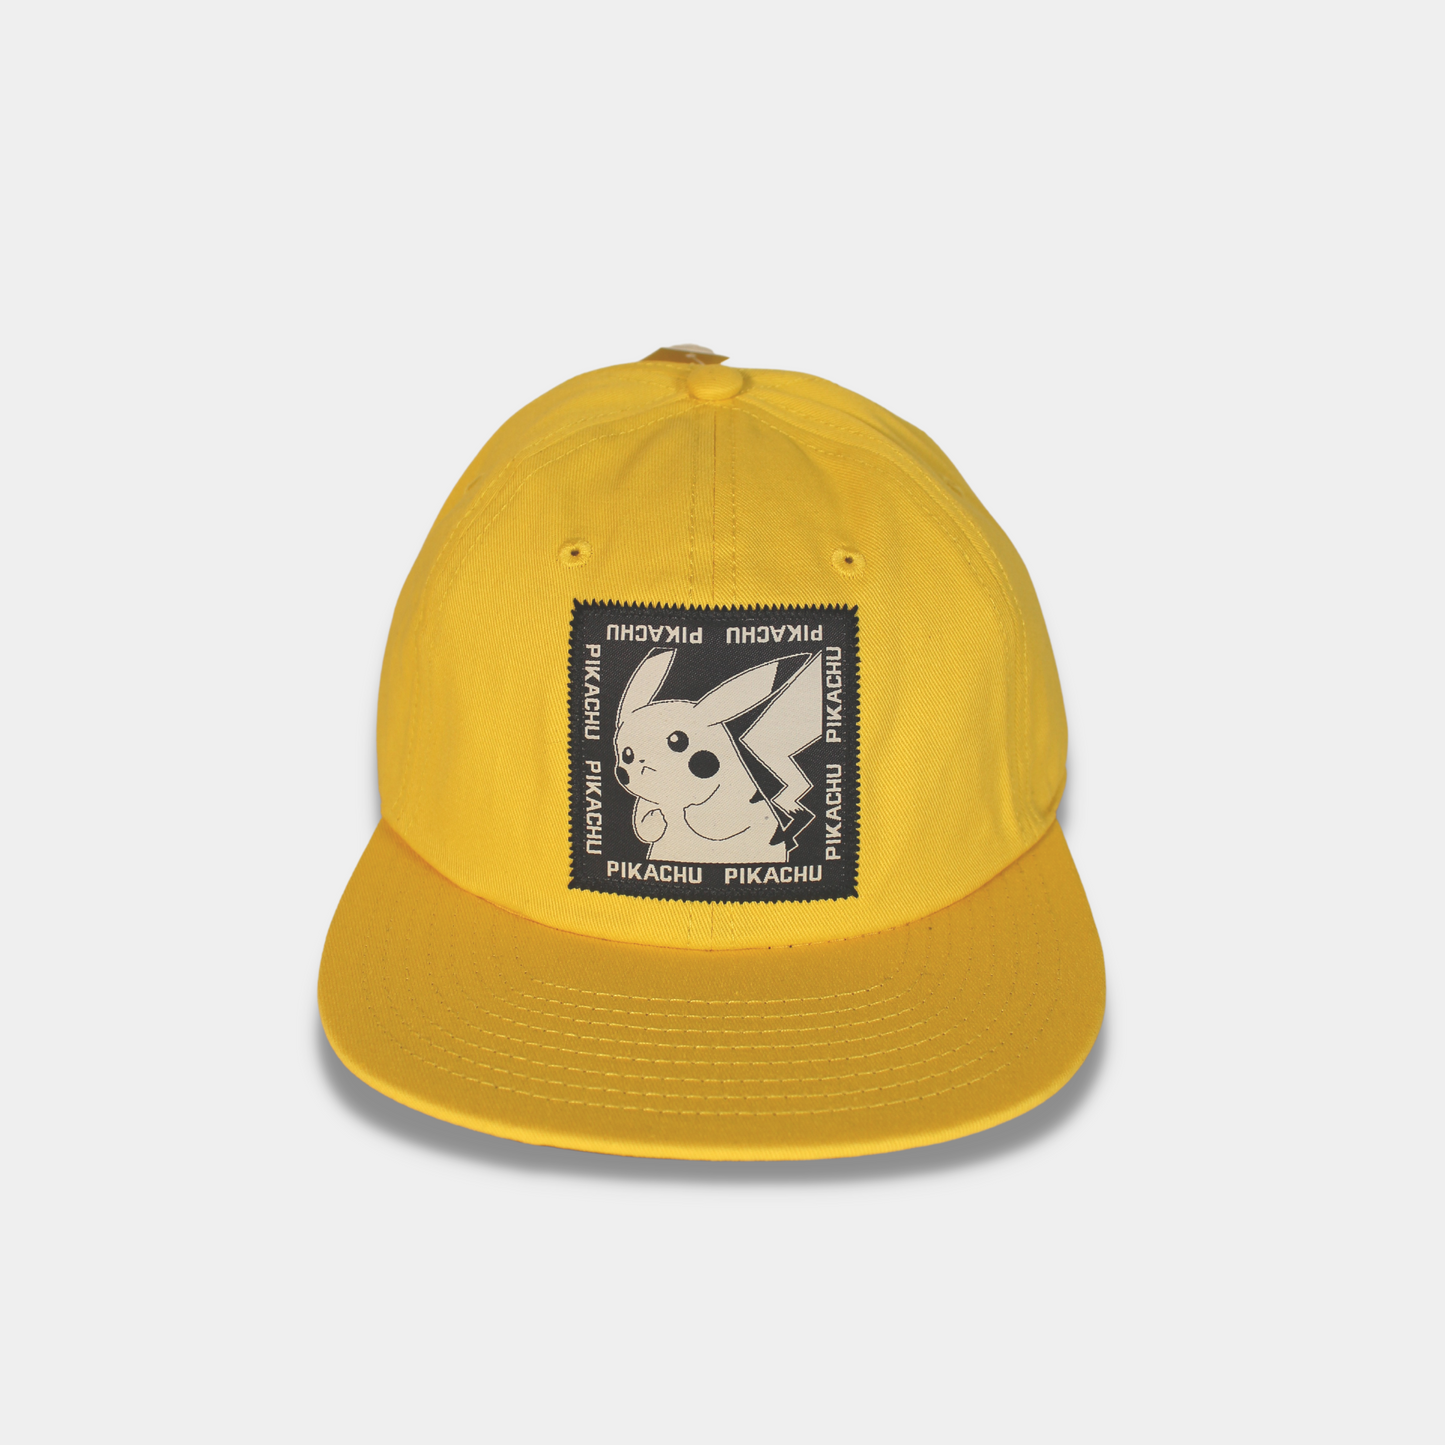 Pikachu Snapback